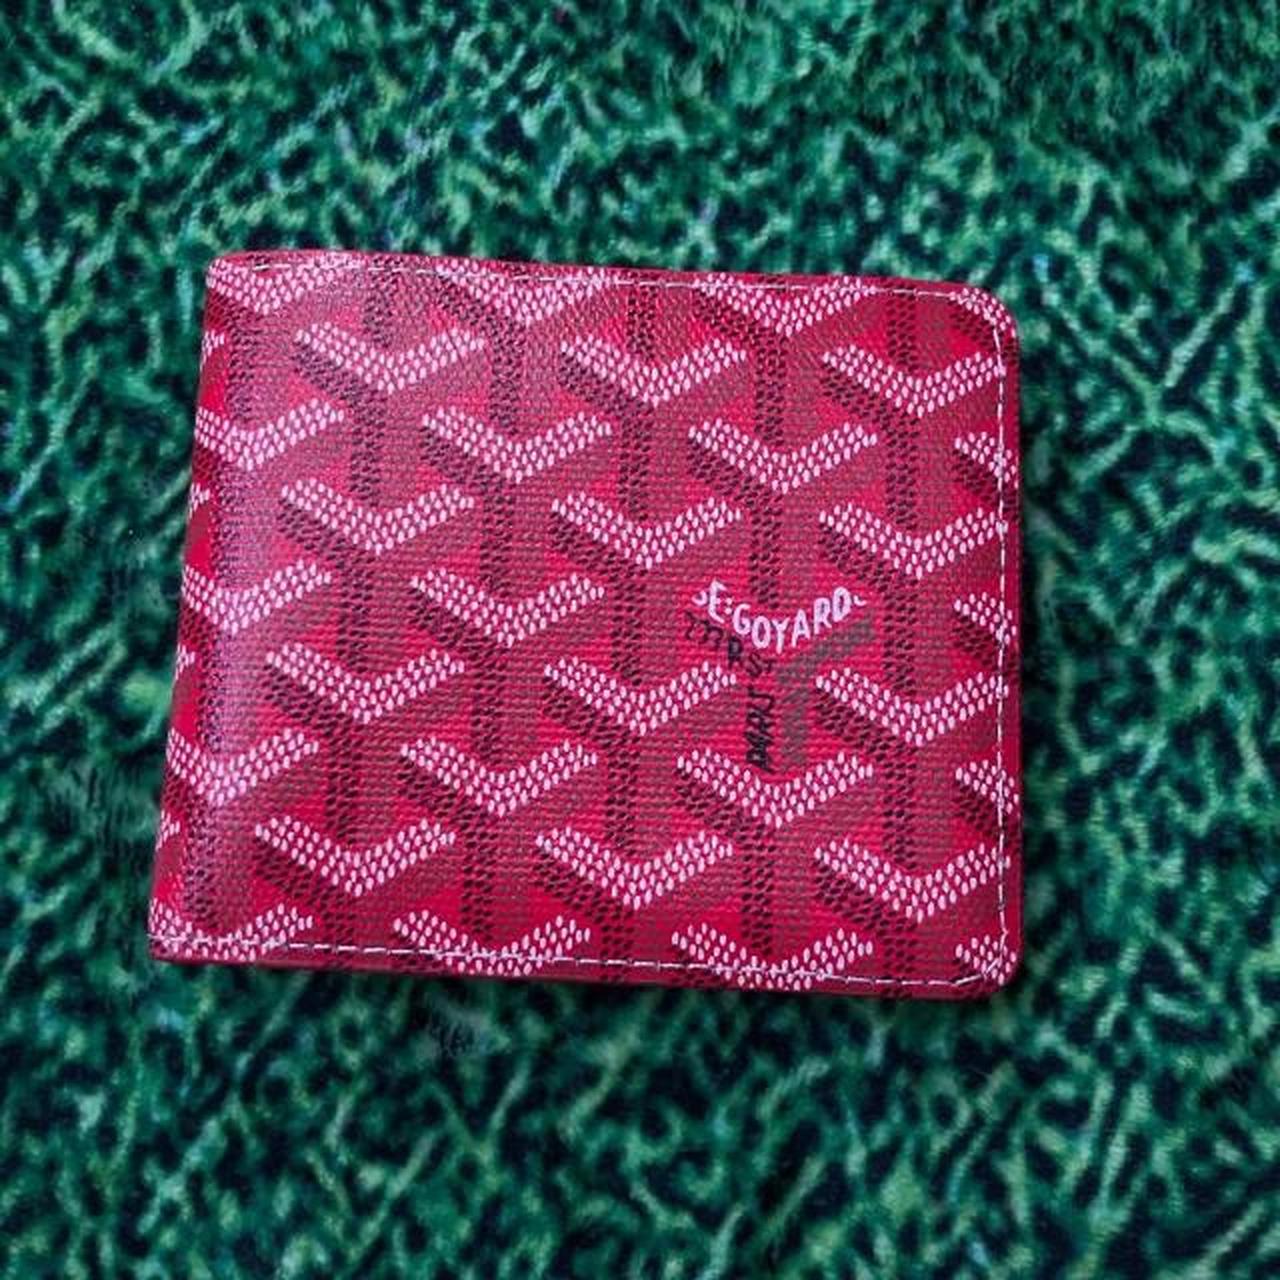 Goyard wallet - Depop